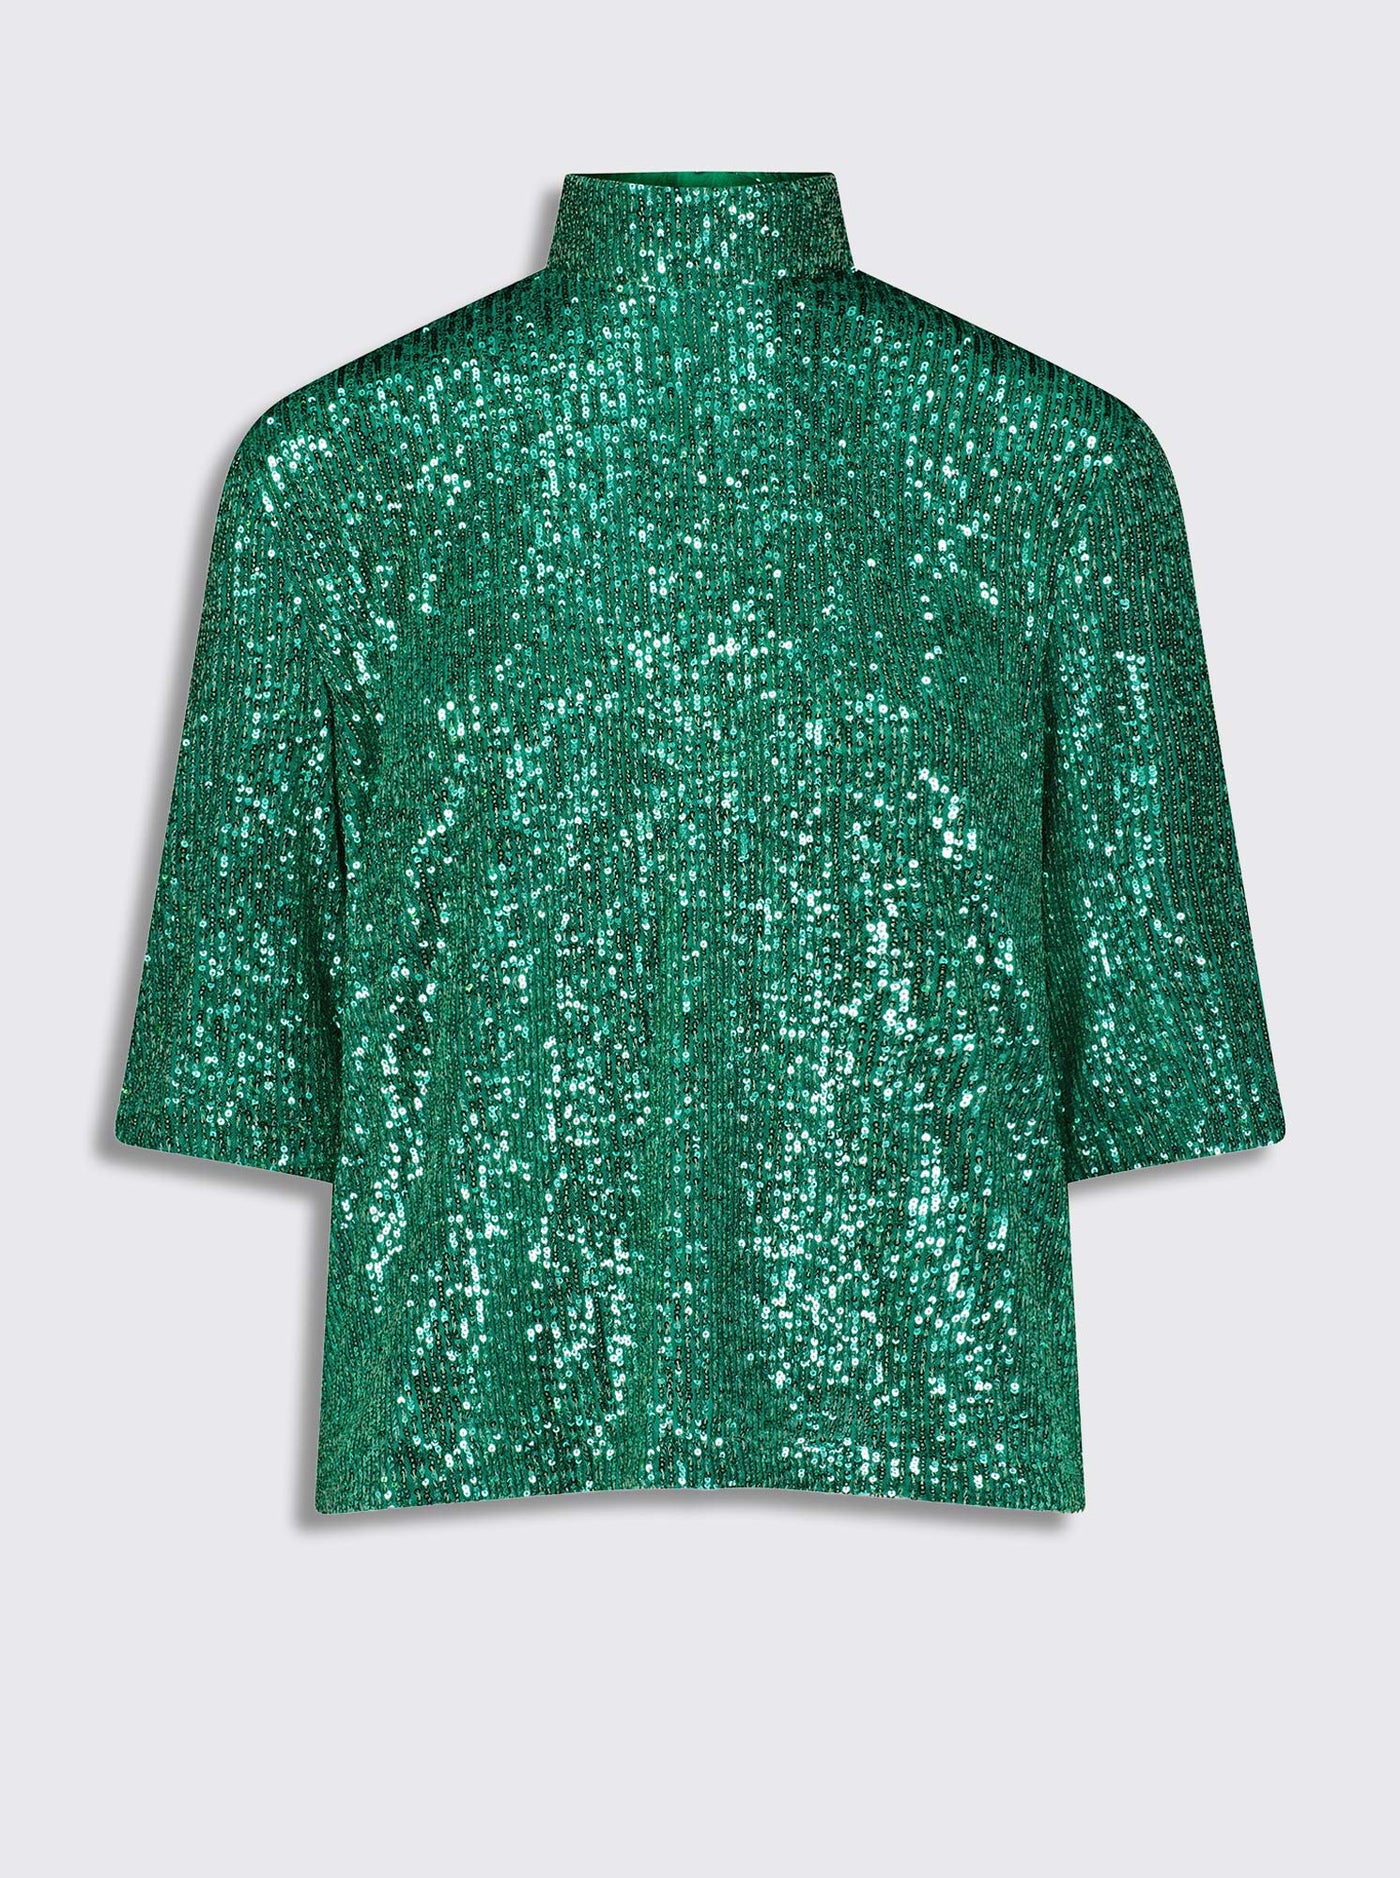 XENIA Fluid Sequin Mock Neck Blouse in Emerald